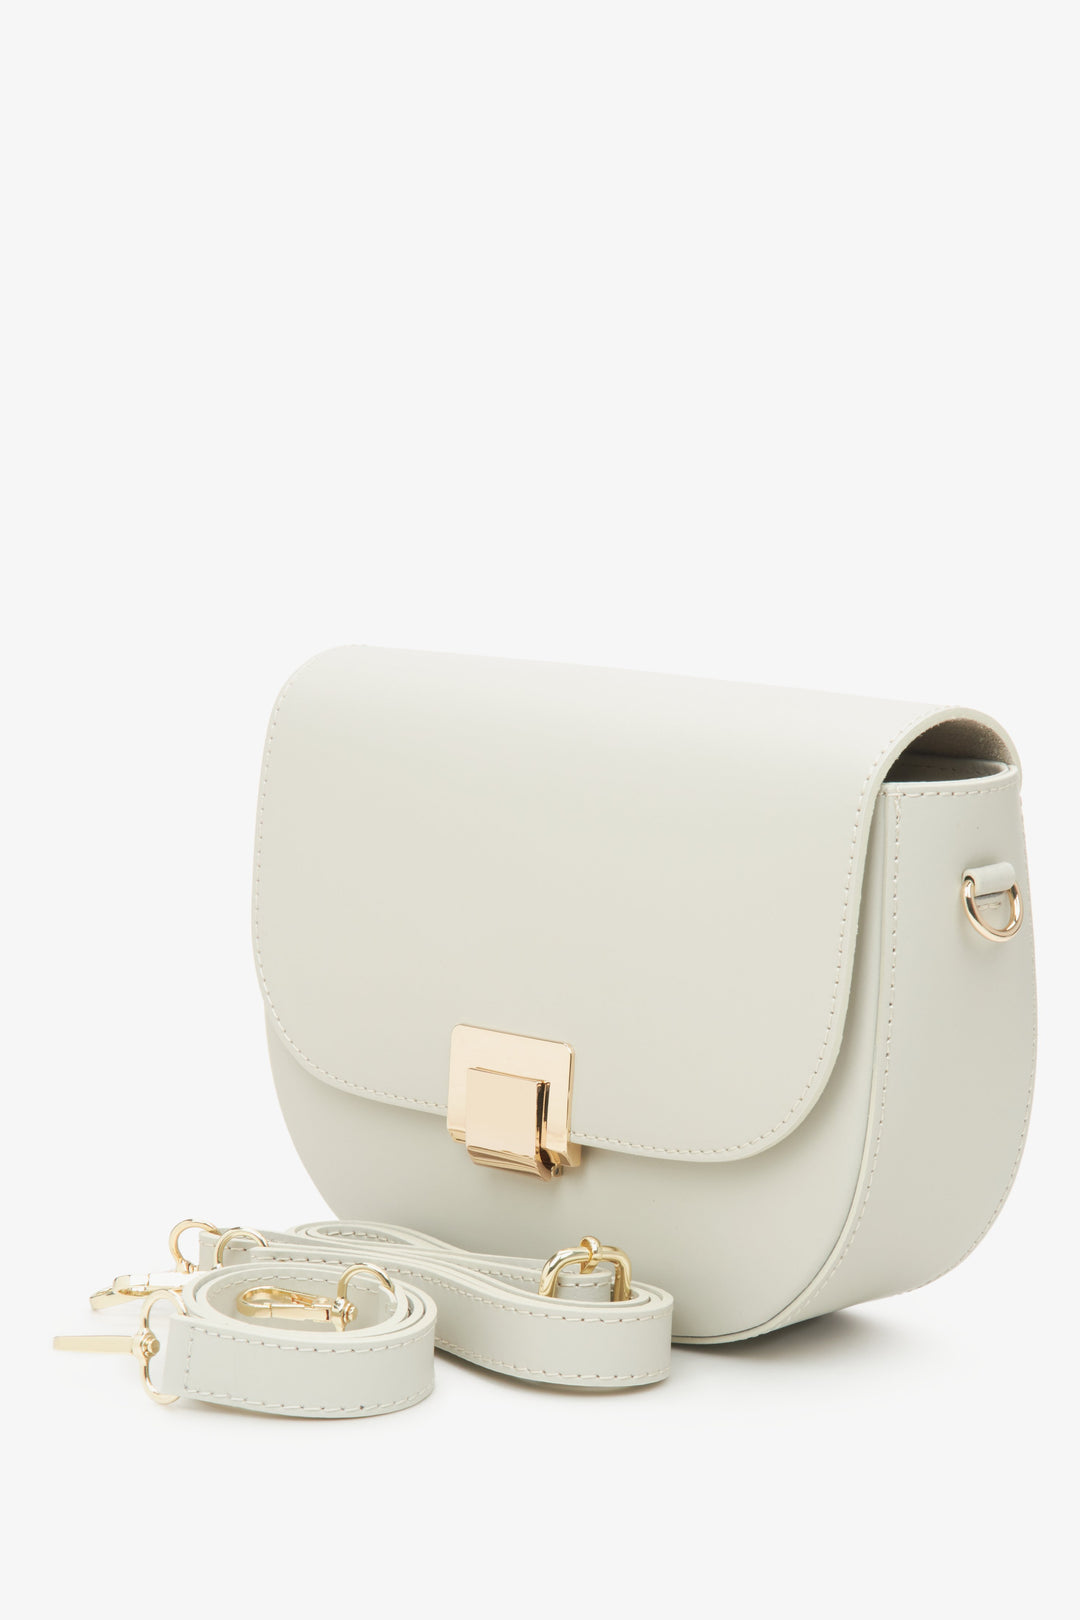 Estro women's milky-beige leather handbag with an adjustable strap.